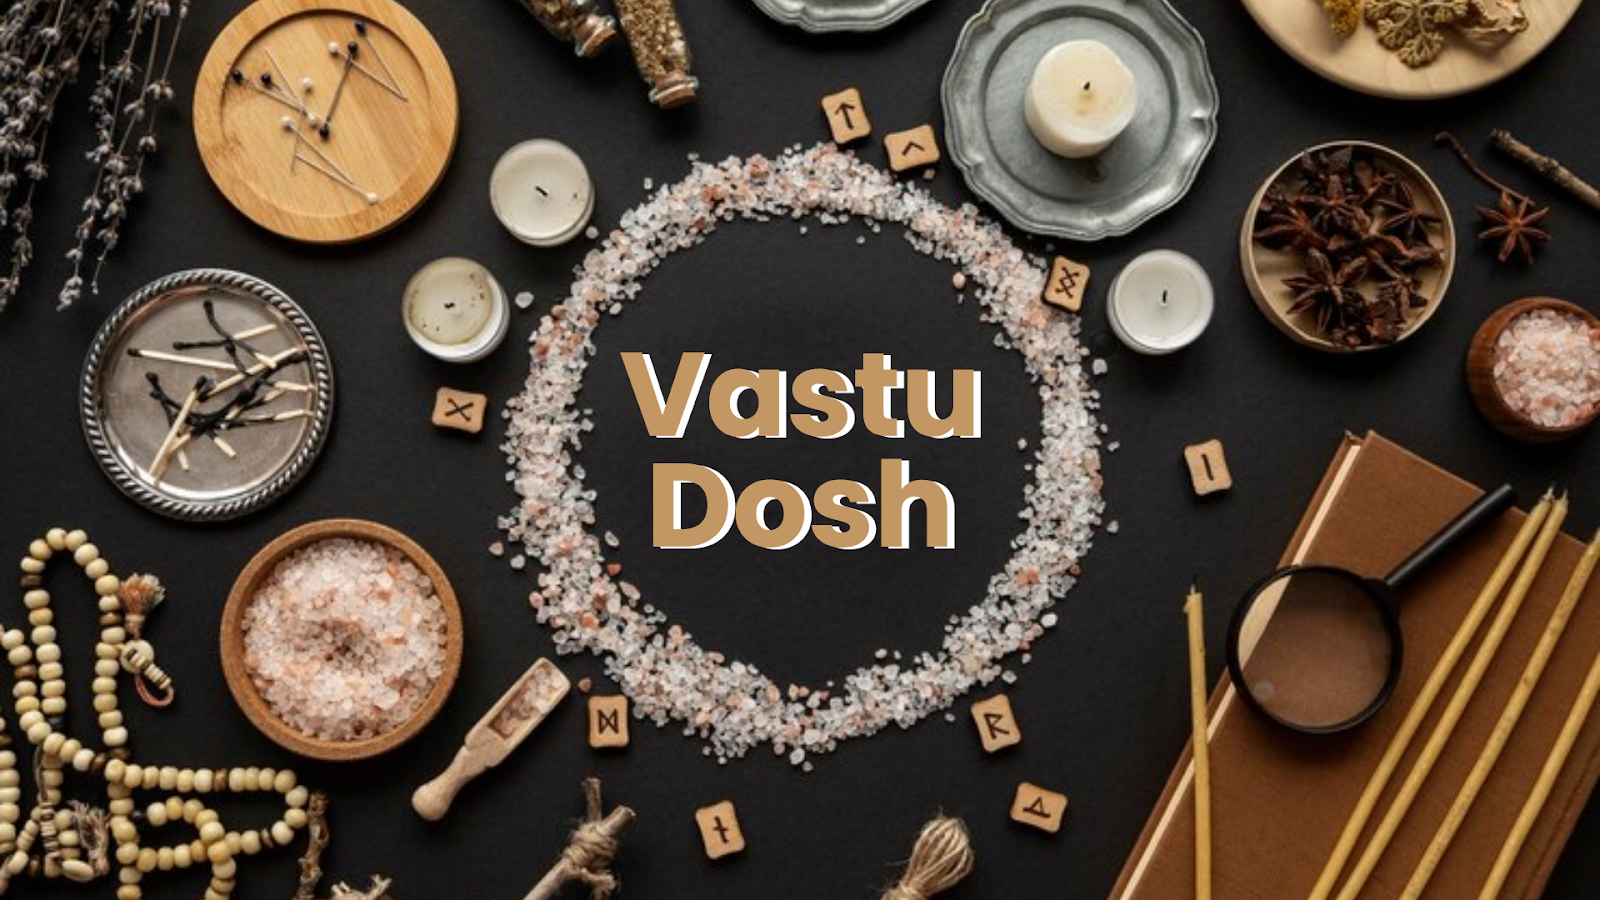 Understanding the nuances of Vaastu dosh assessment